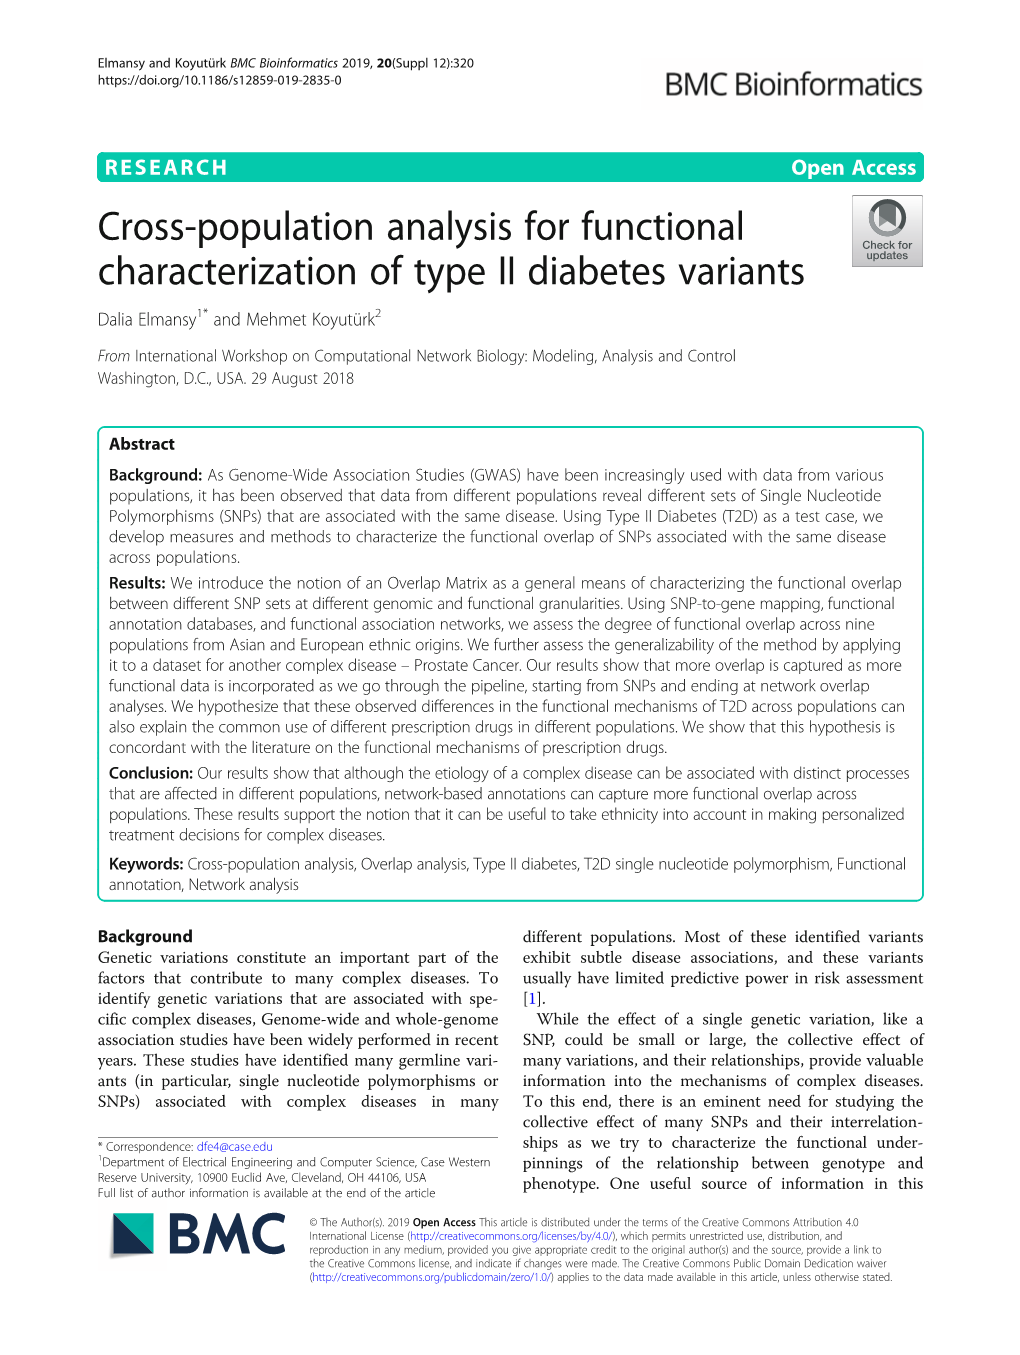 Cross-Population Analysis for Functional Characterization of Type II Diabetes Variants Dalia Elmansy1* and Mehmet Koyutürk2